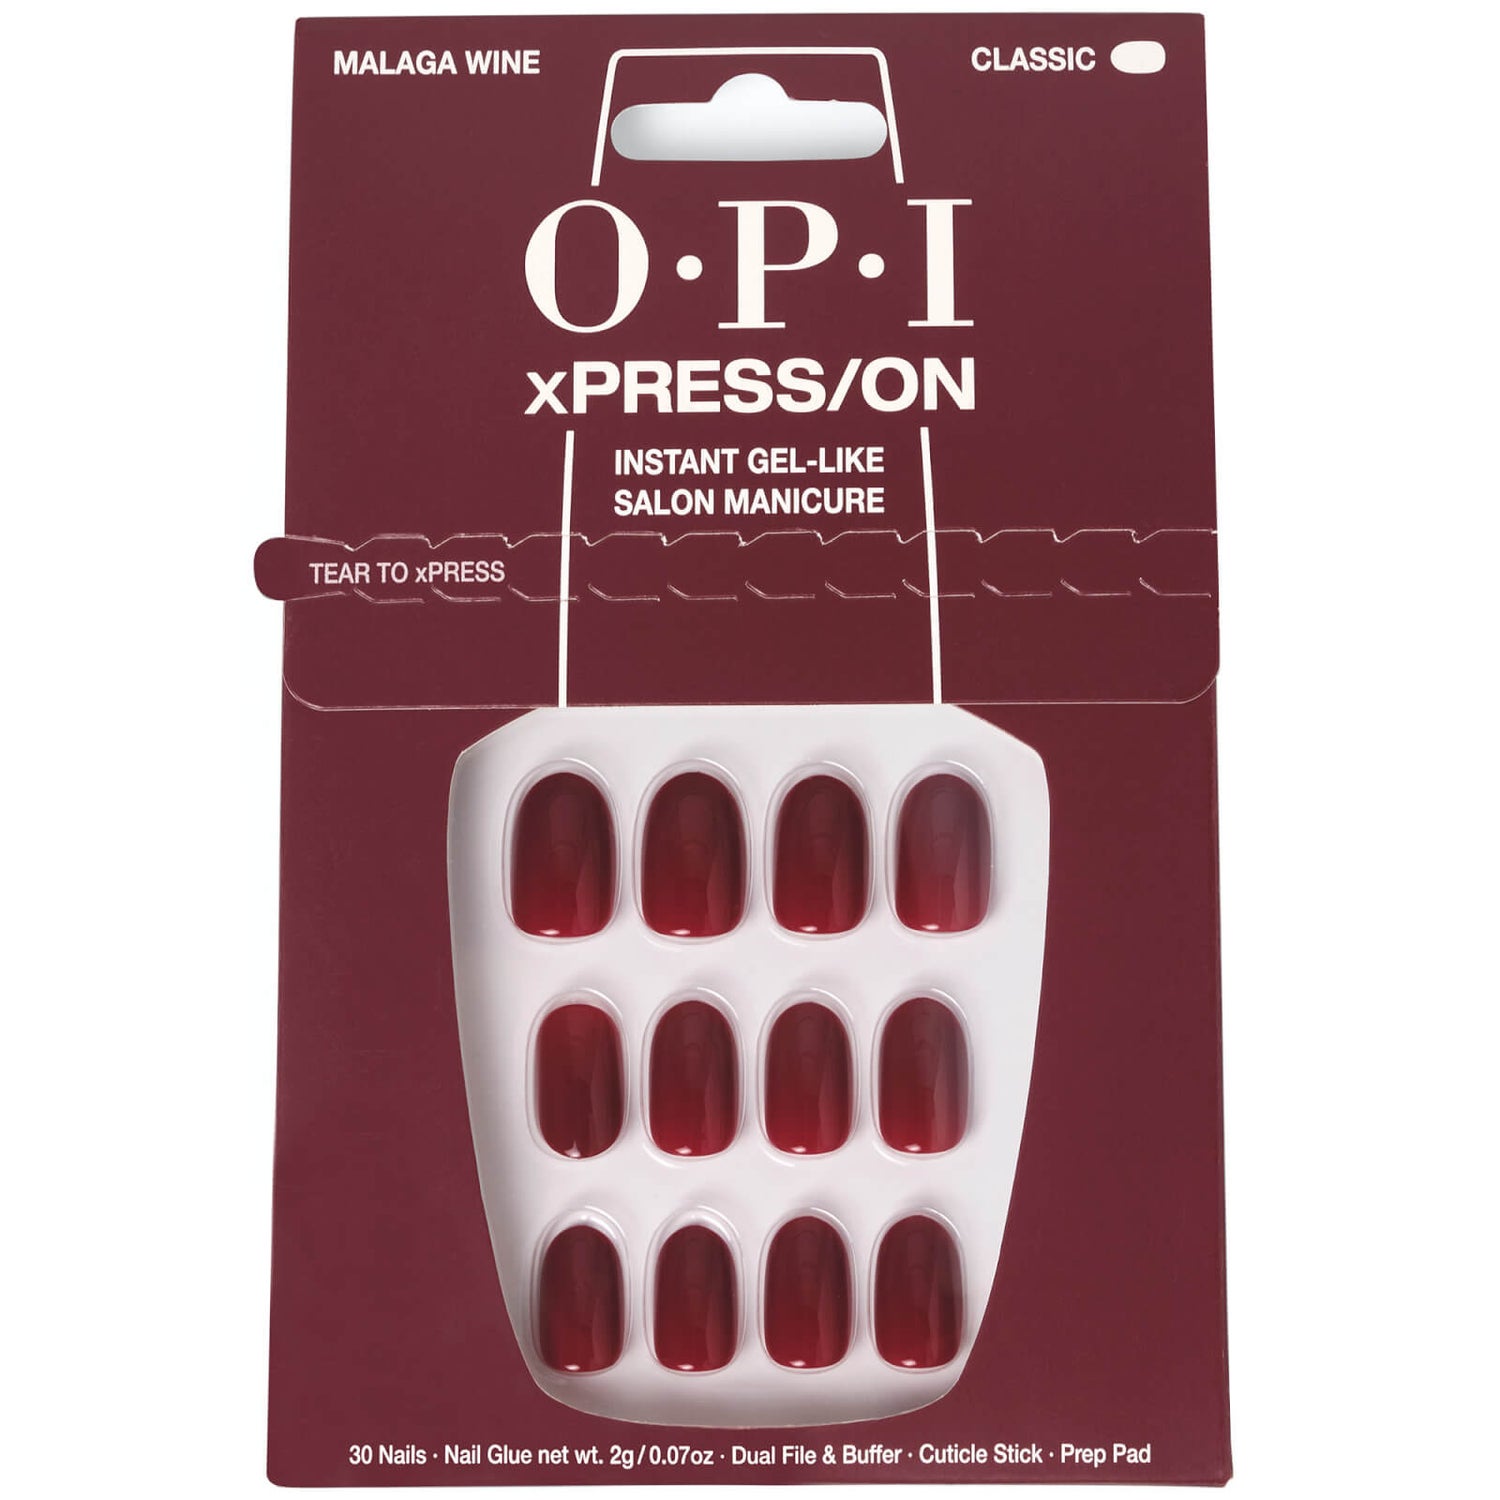 OPI xPRESS/ON - Malaga Wine Press On Nails Gel-Like Salon Manicure ...